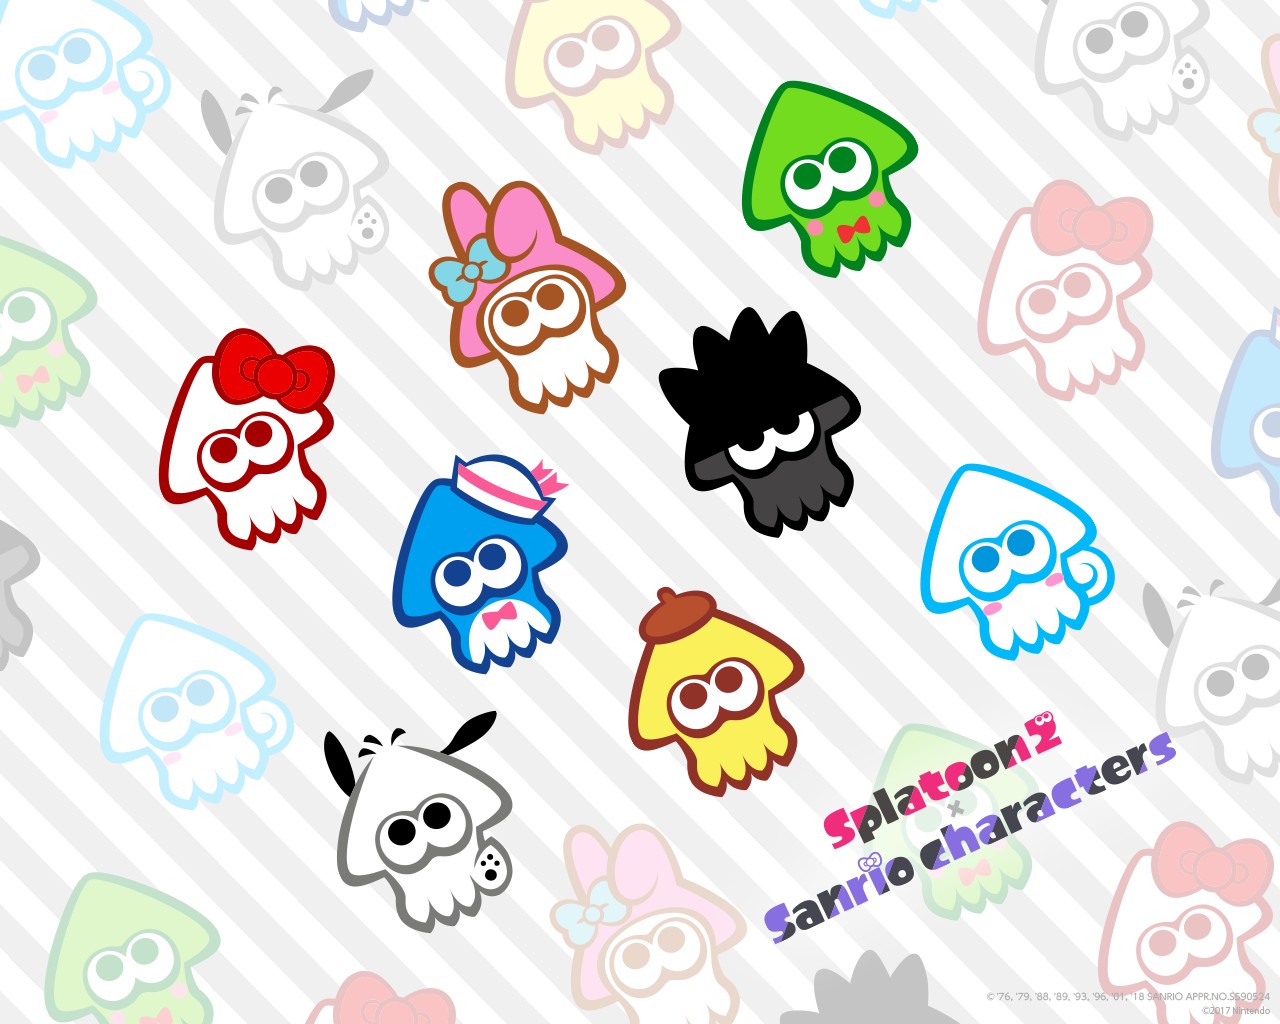 Download This Adorable Splatoon 2 Sanrio Characters Wallpaper – NintendoSoup